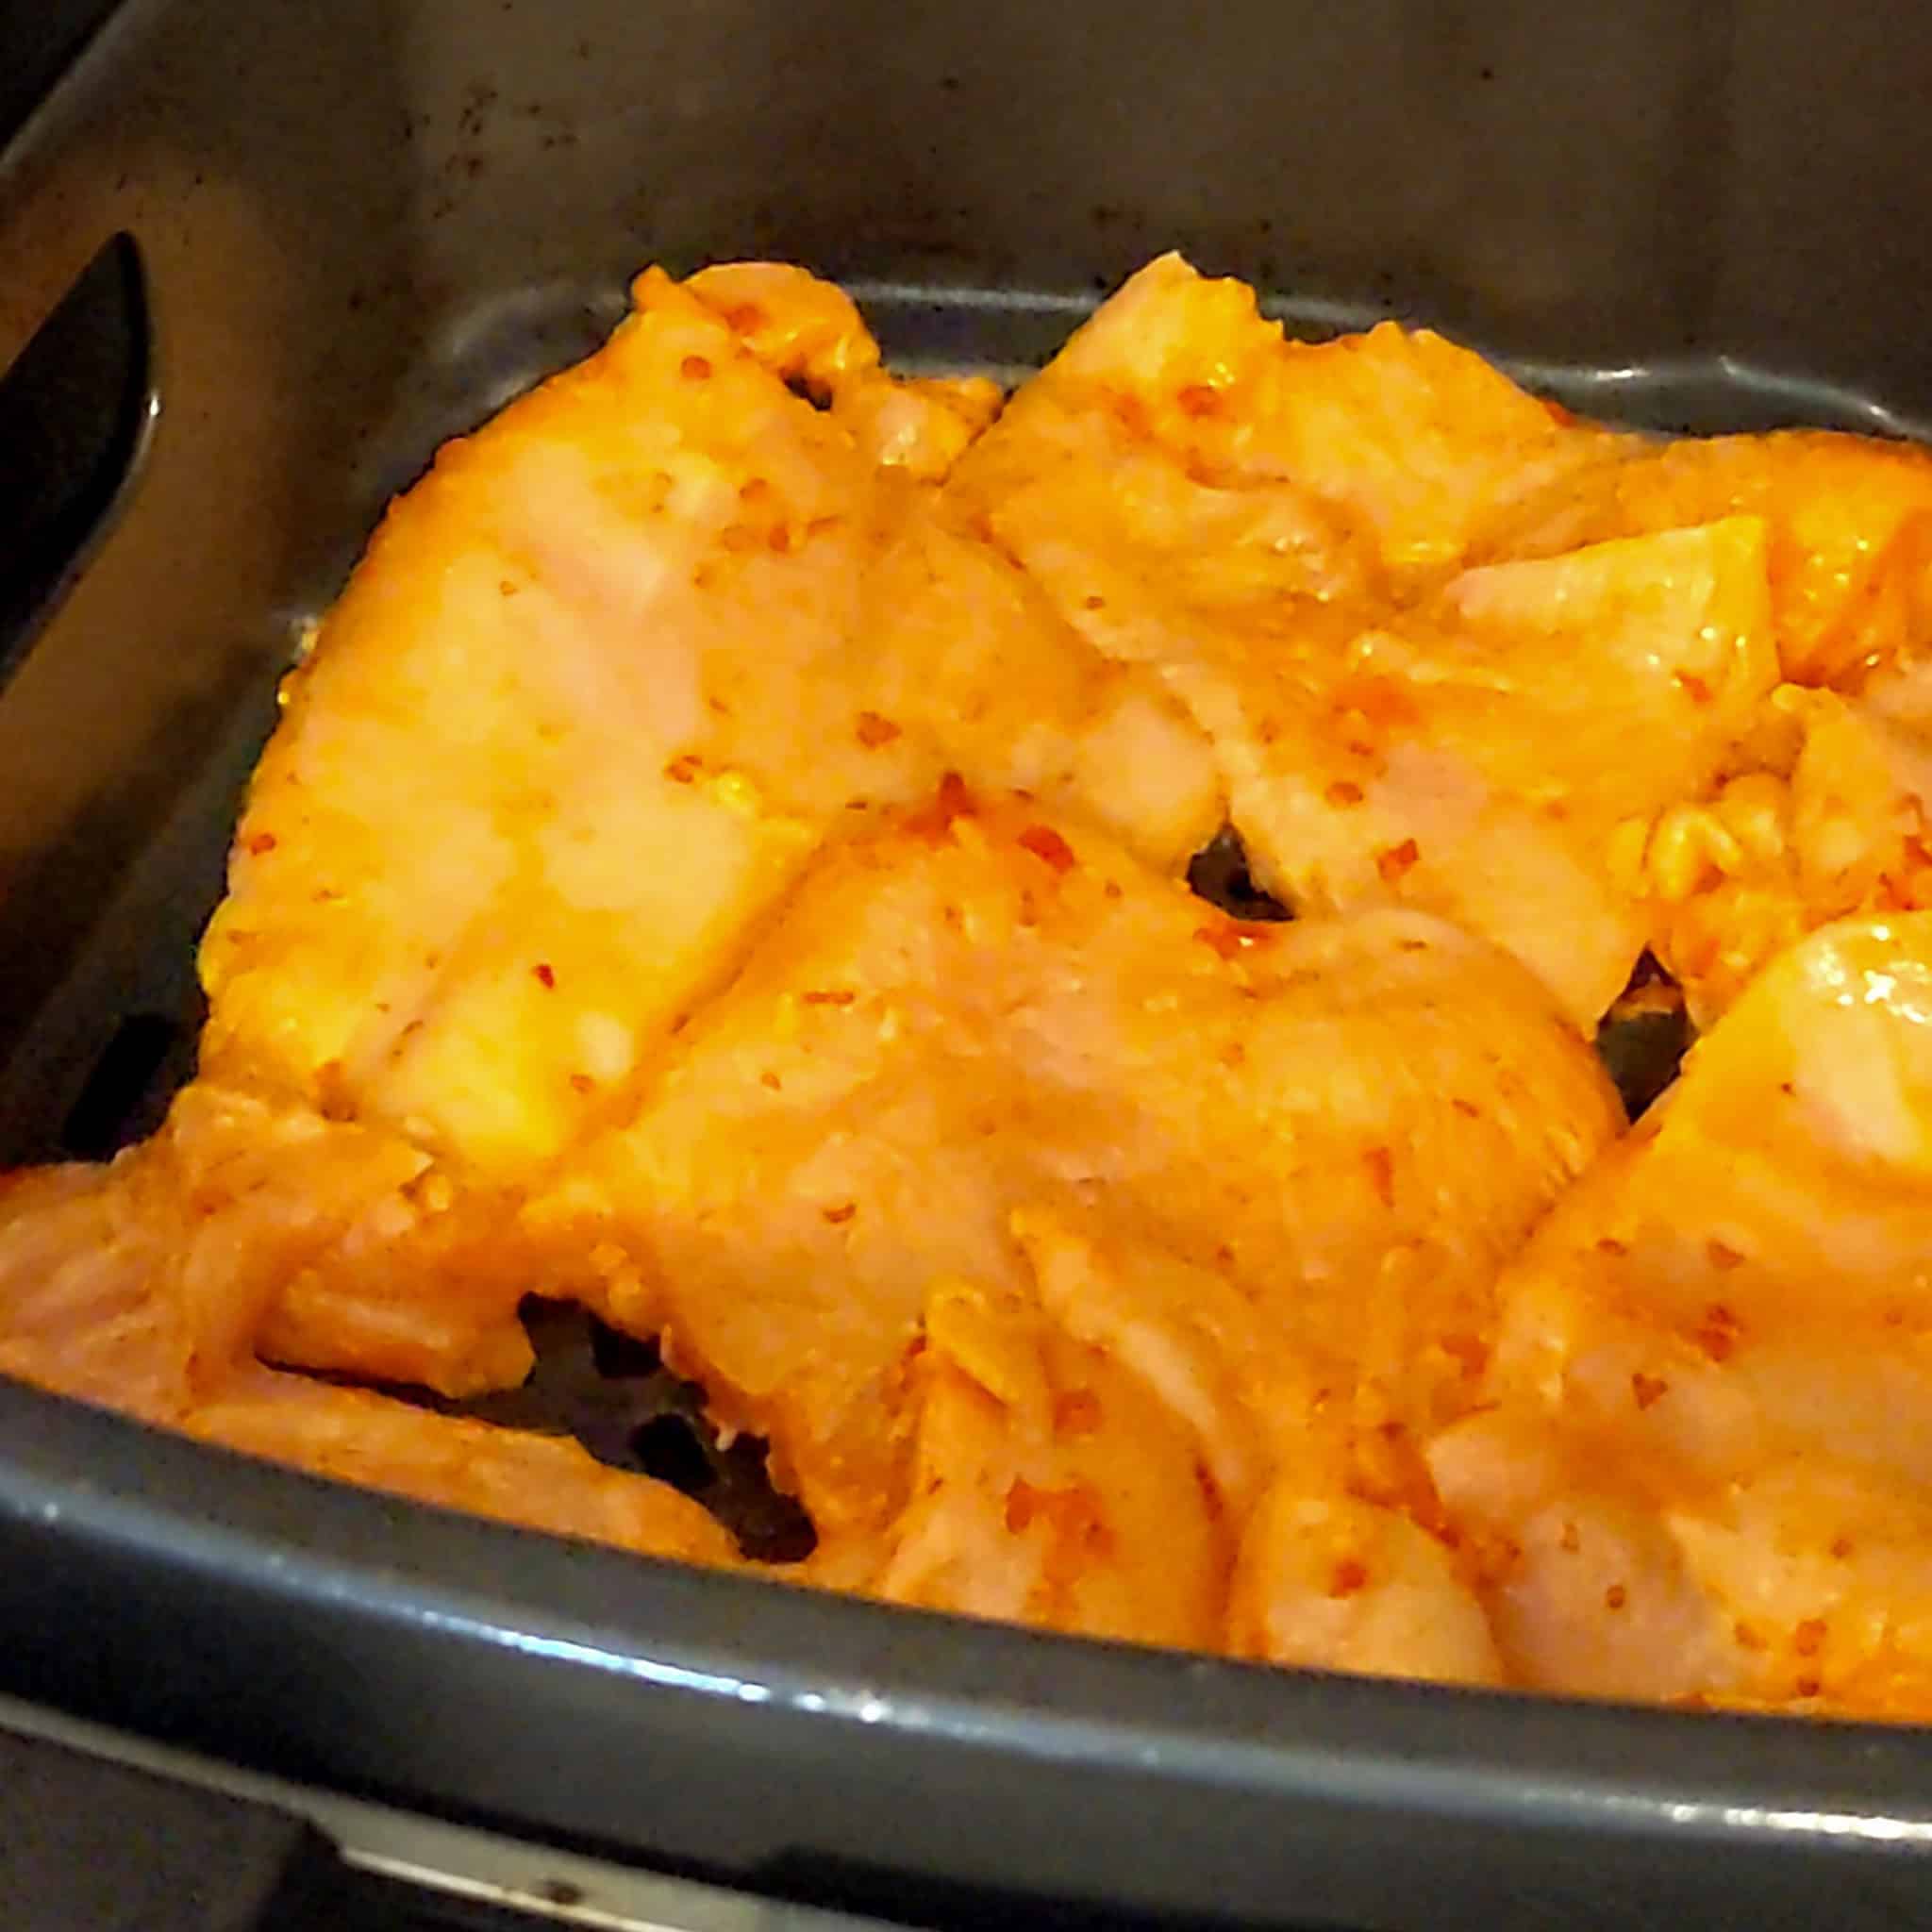 garlic chili sauce marinaded chicken cutlets in an air fryer basket.